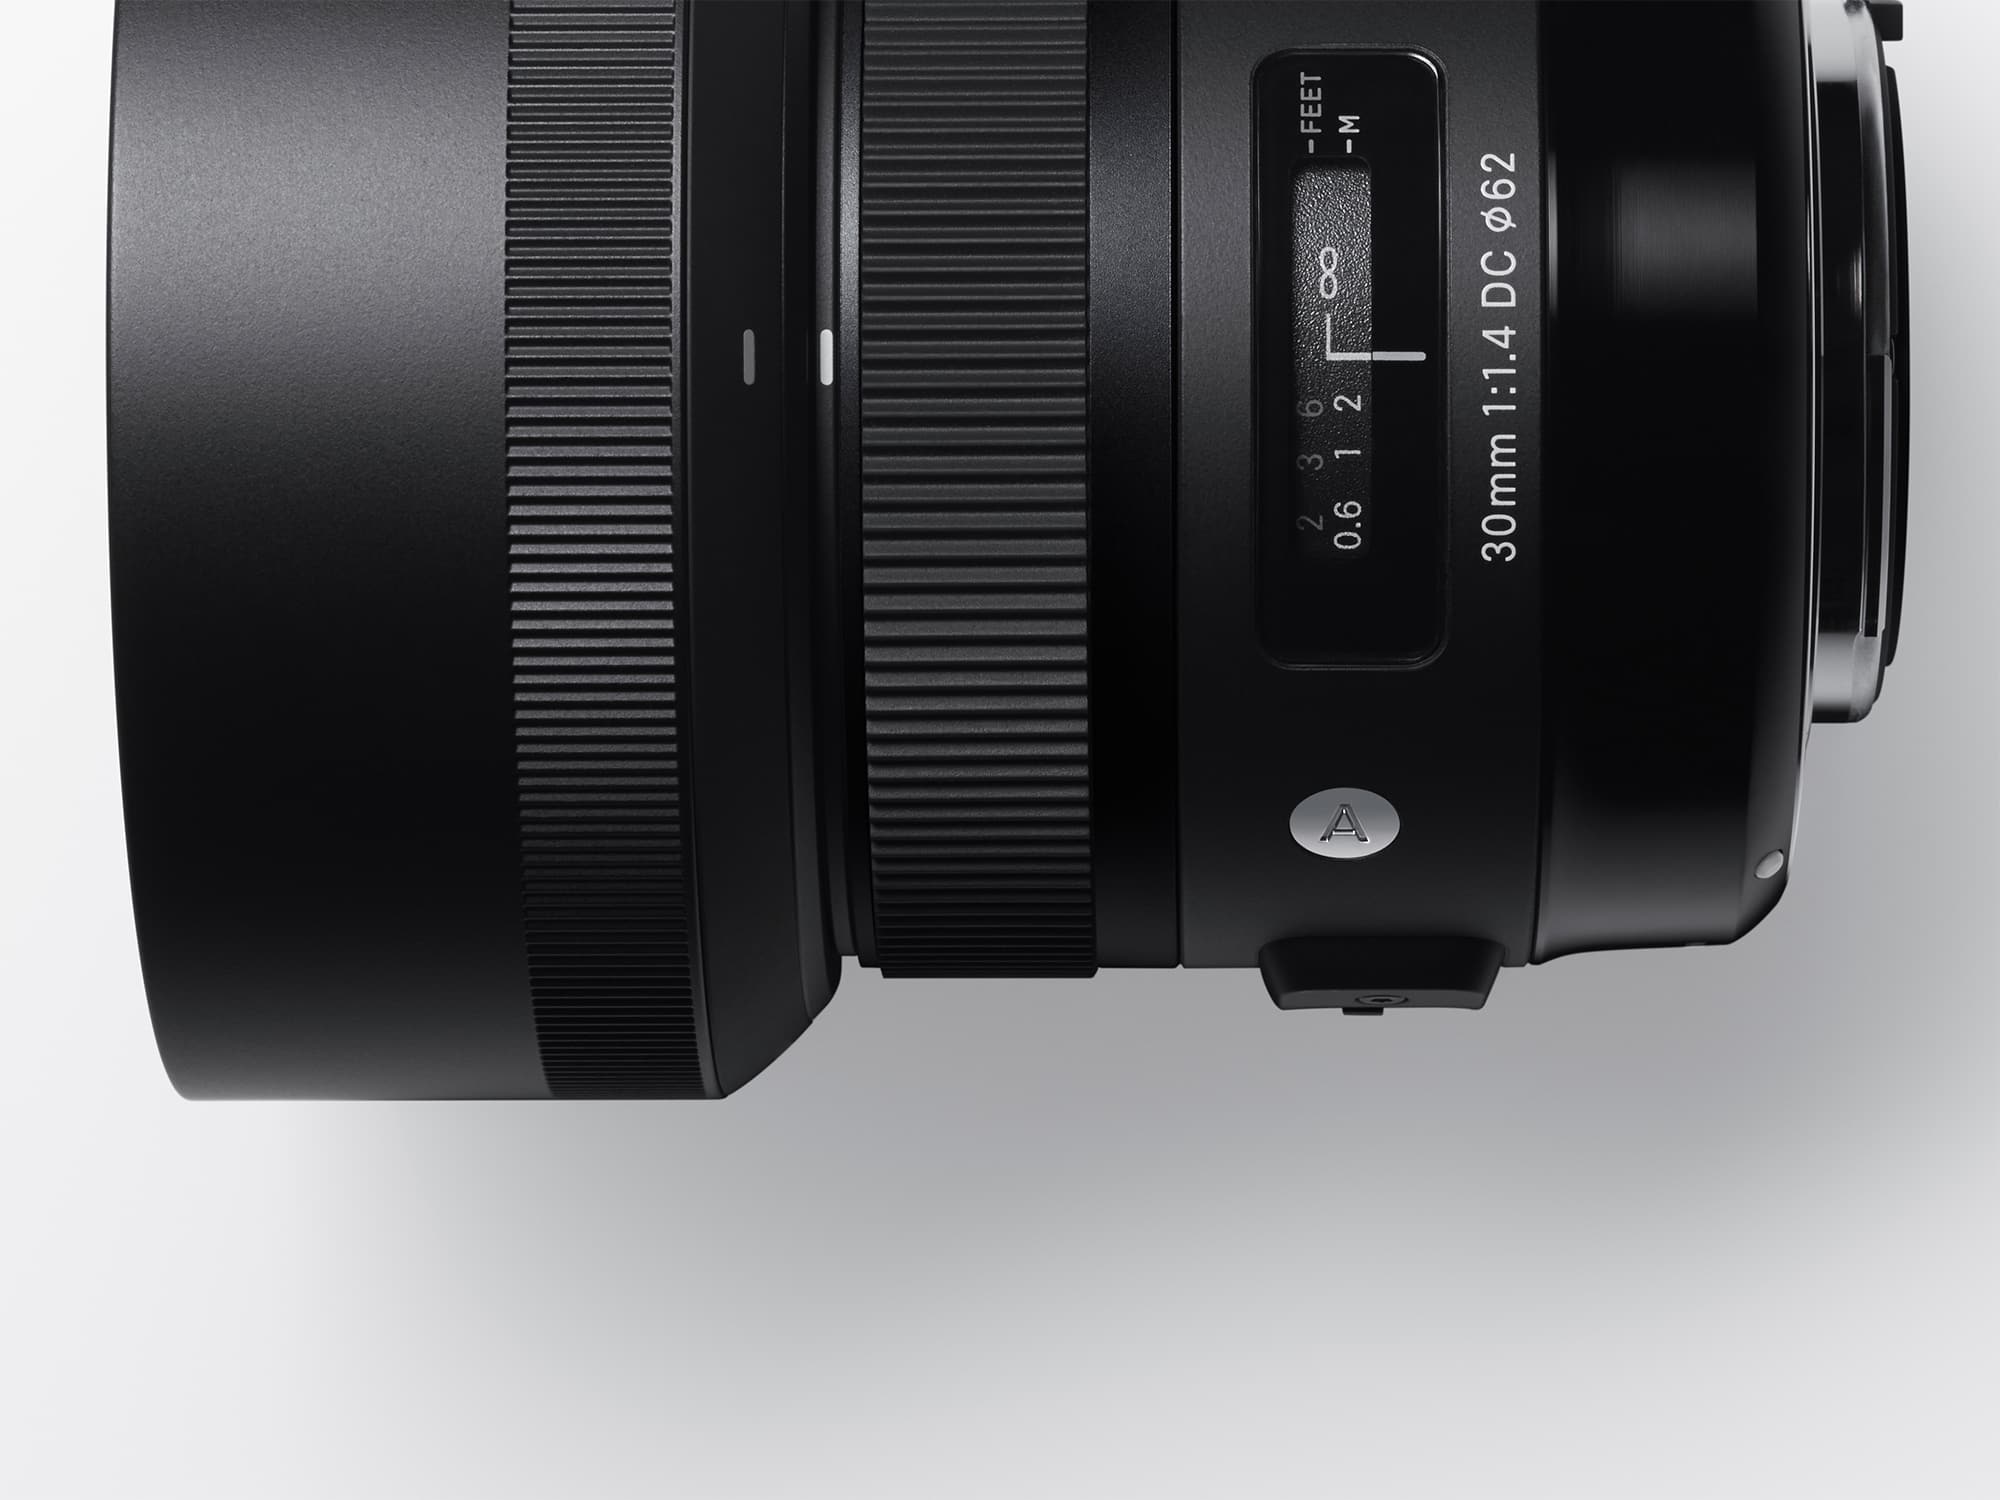 Sigma 30 mm. Sigma 30mm 1.4 Sony e. Sigma 30 1.4 Nikon. Sigma 30 mm DC DN. Sigma 30mm 1.4 DC.